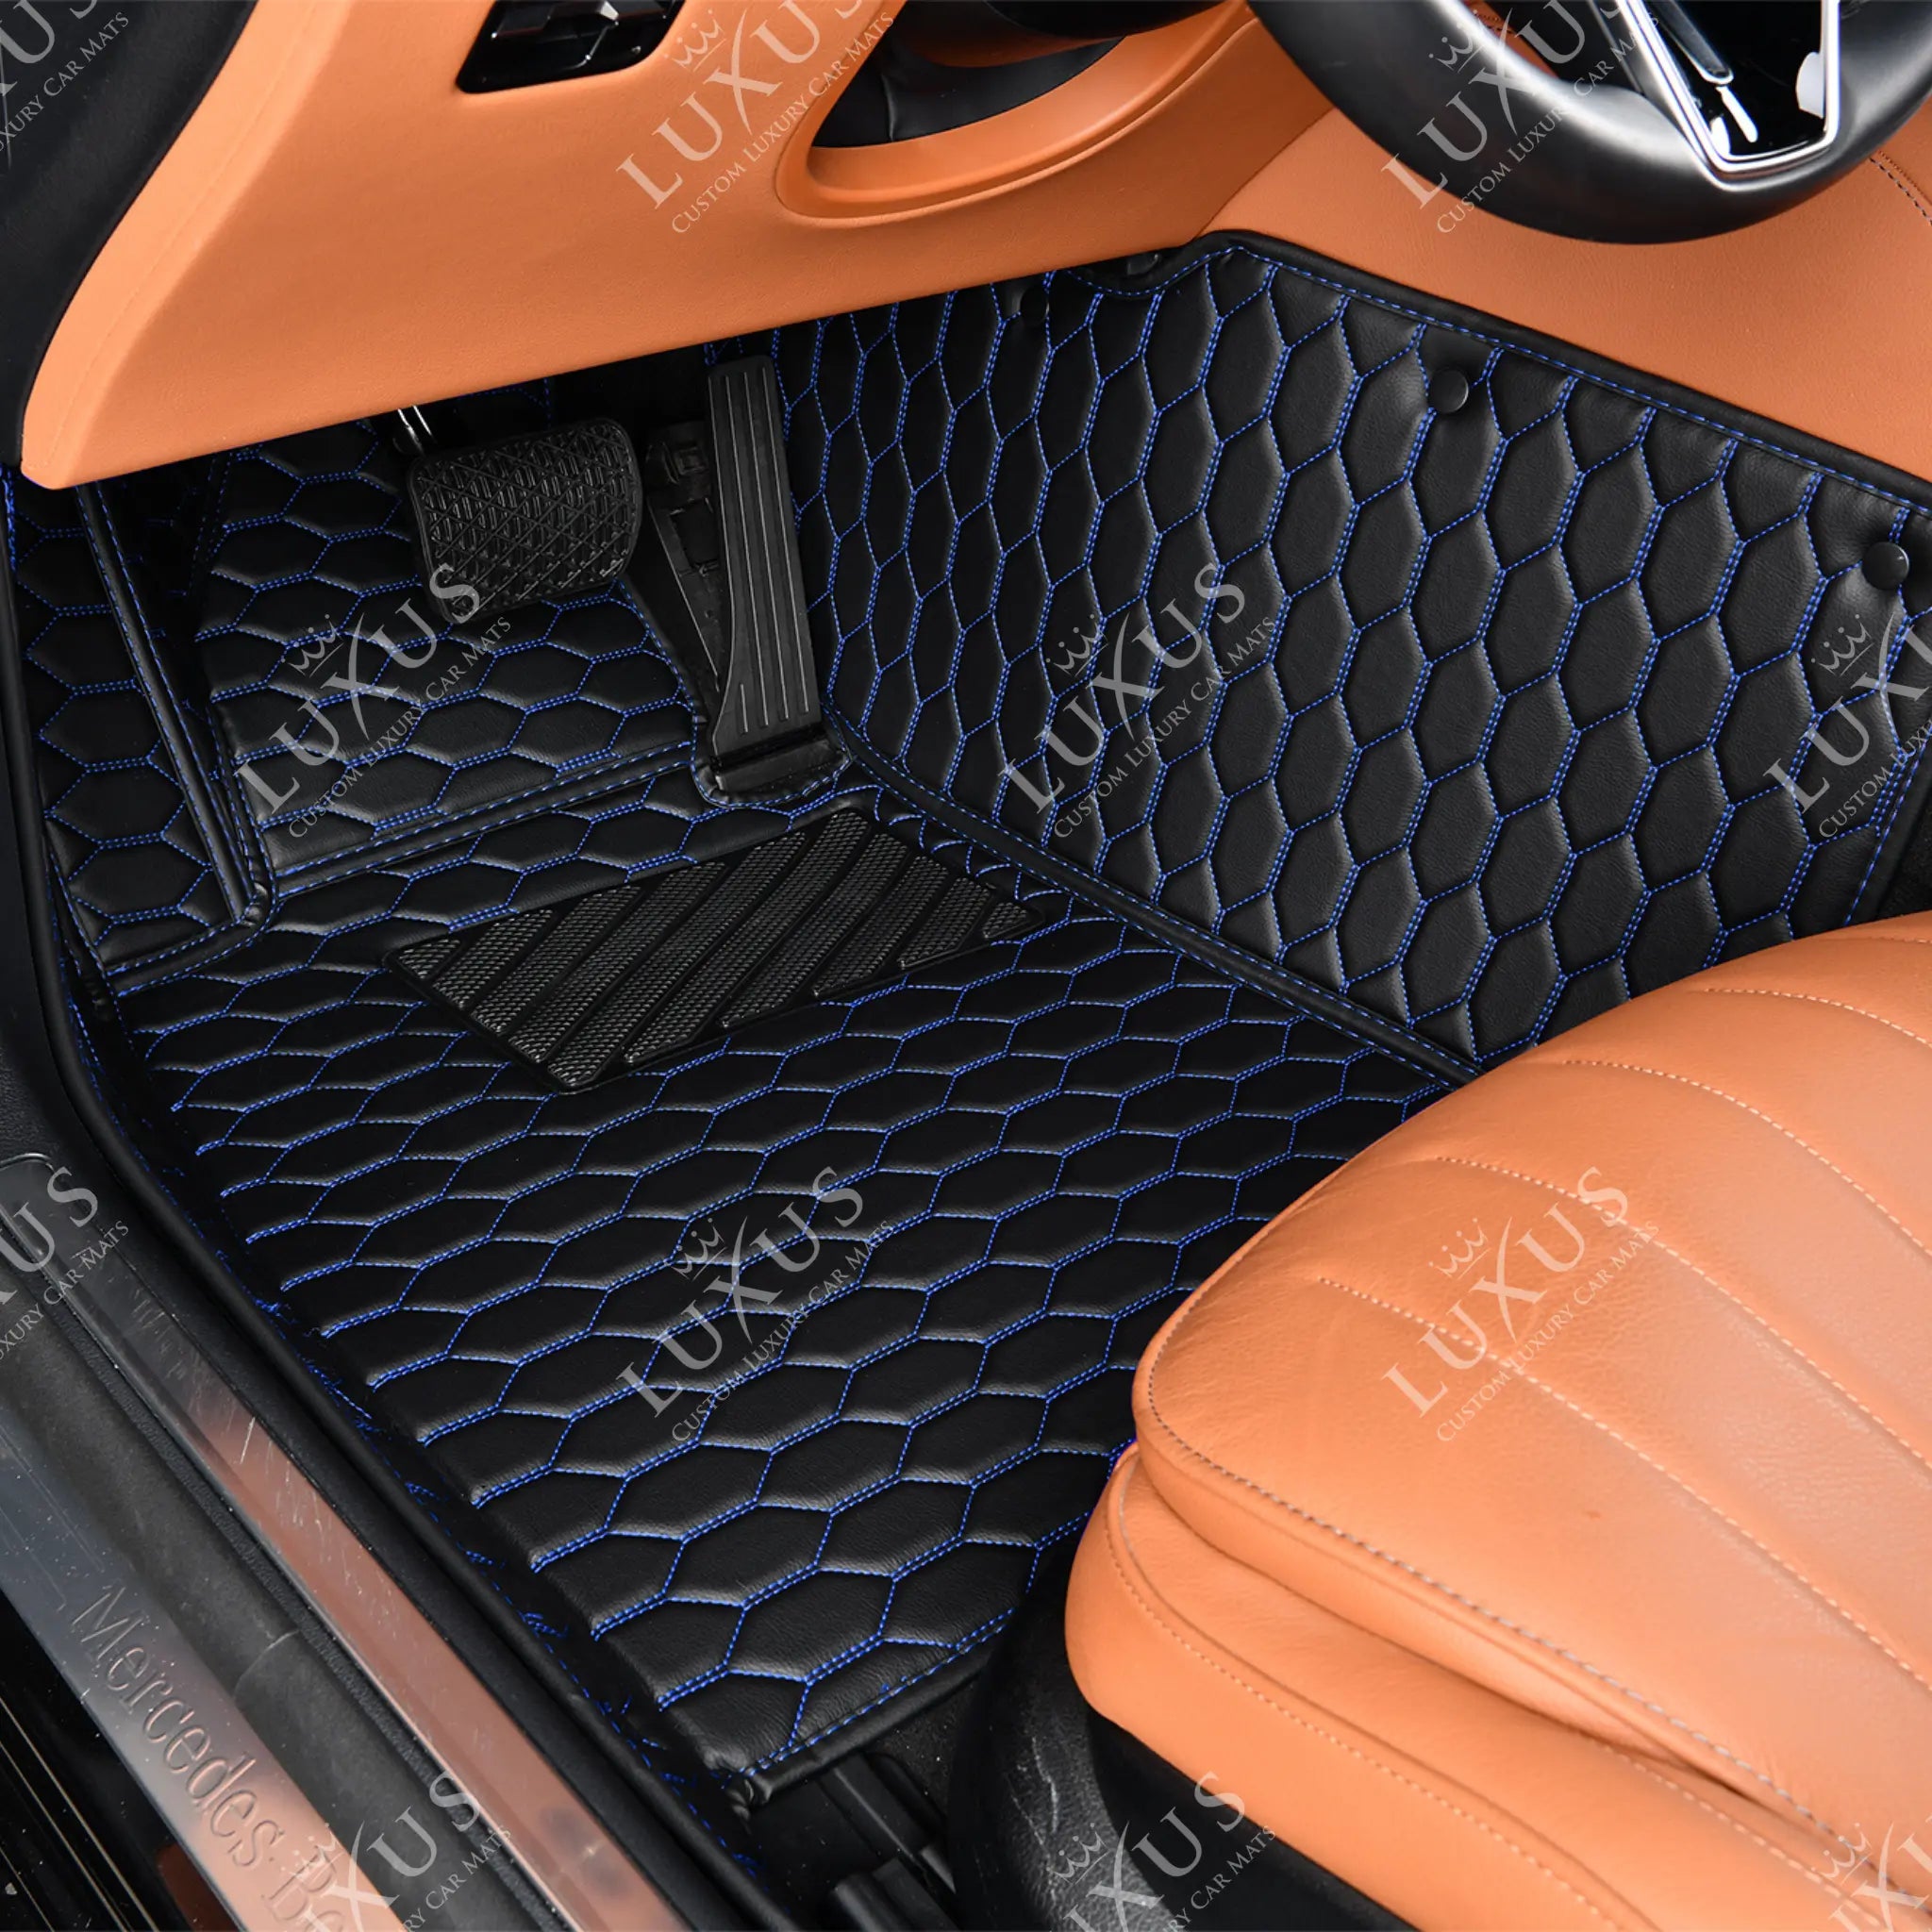 Floor Mats For Car, Truck & SUV Luxus Car Mats Custom All-Weather Waterproof  Diamond Auto Floor Liner Carpets Rugs Black & beige Stitching